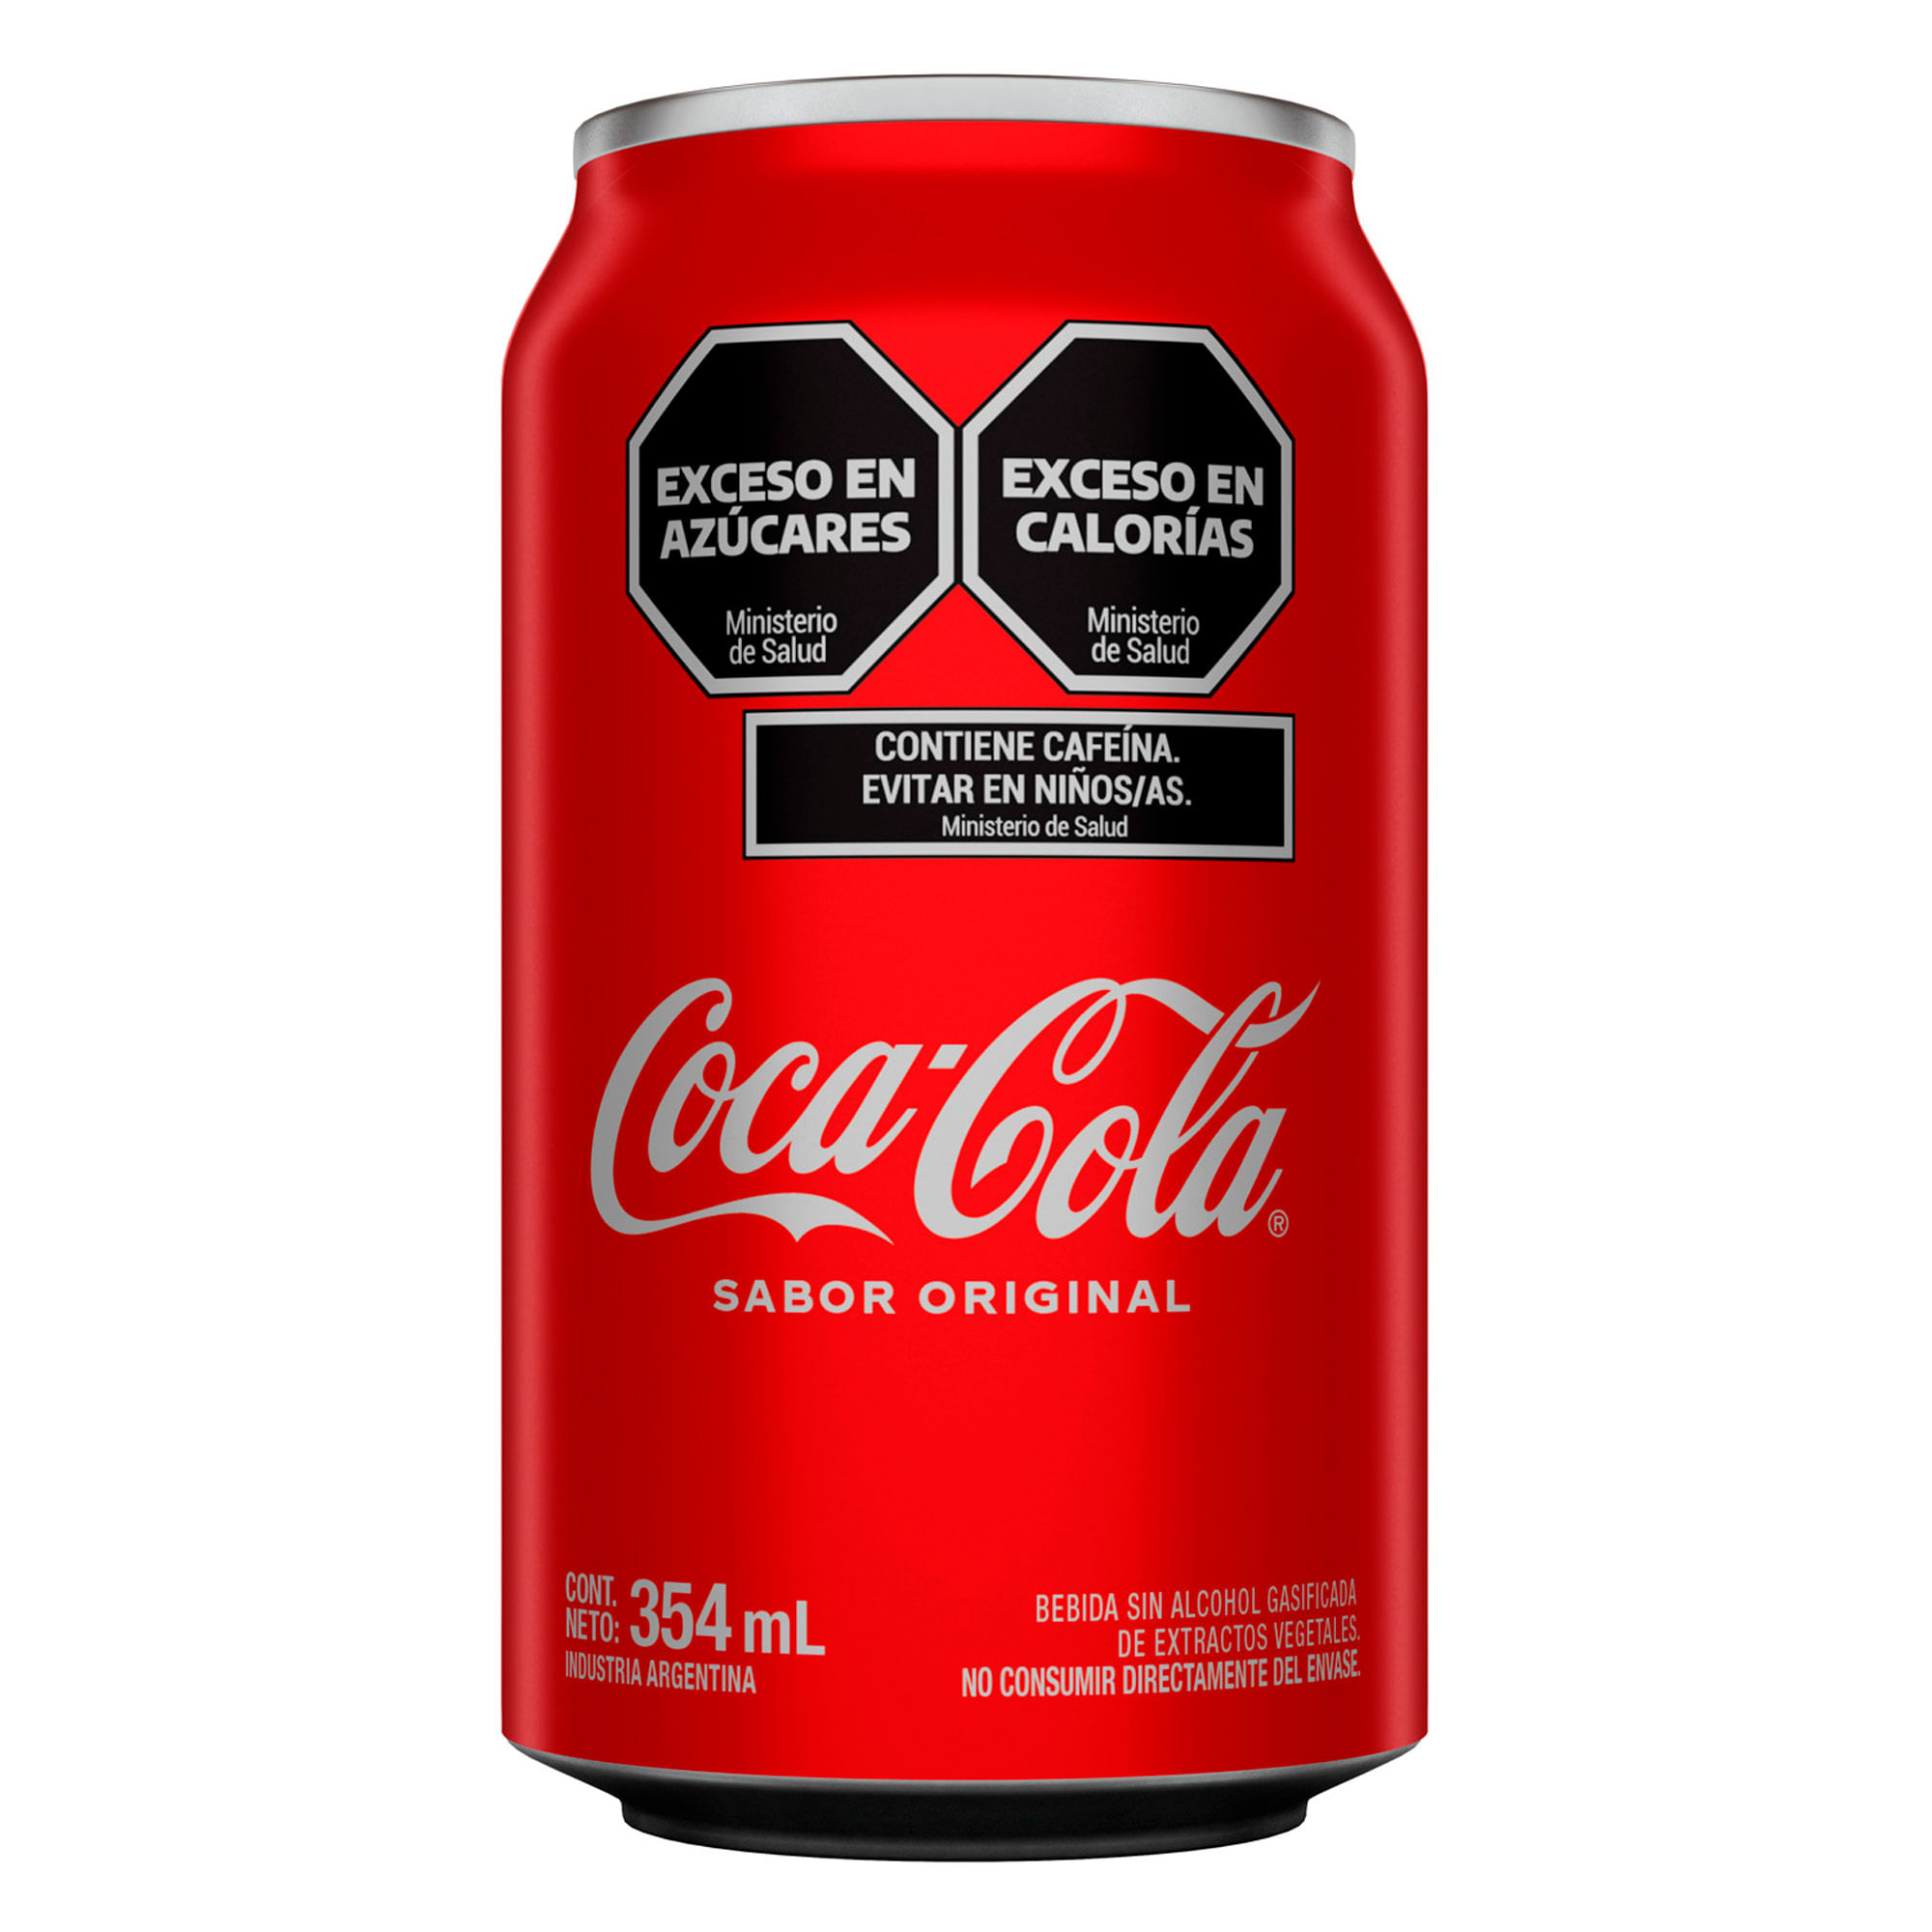 Gaseosa Coca Cola sabor original lata 354 cc. - Carrefour - Las mejores  ofertas en supermercados